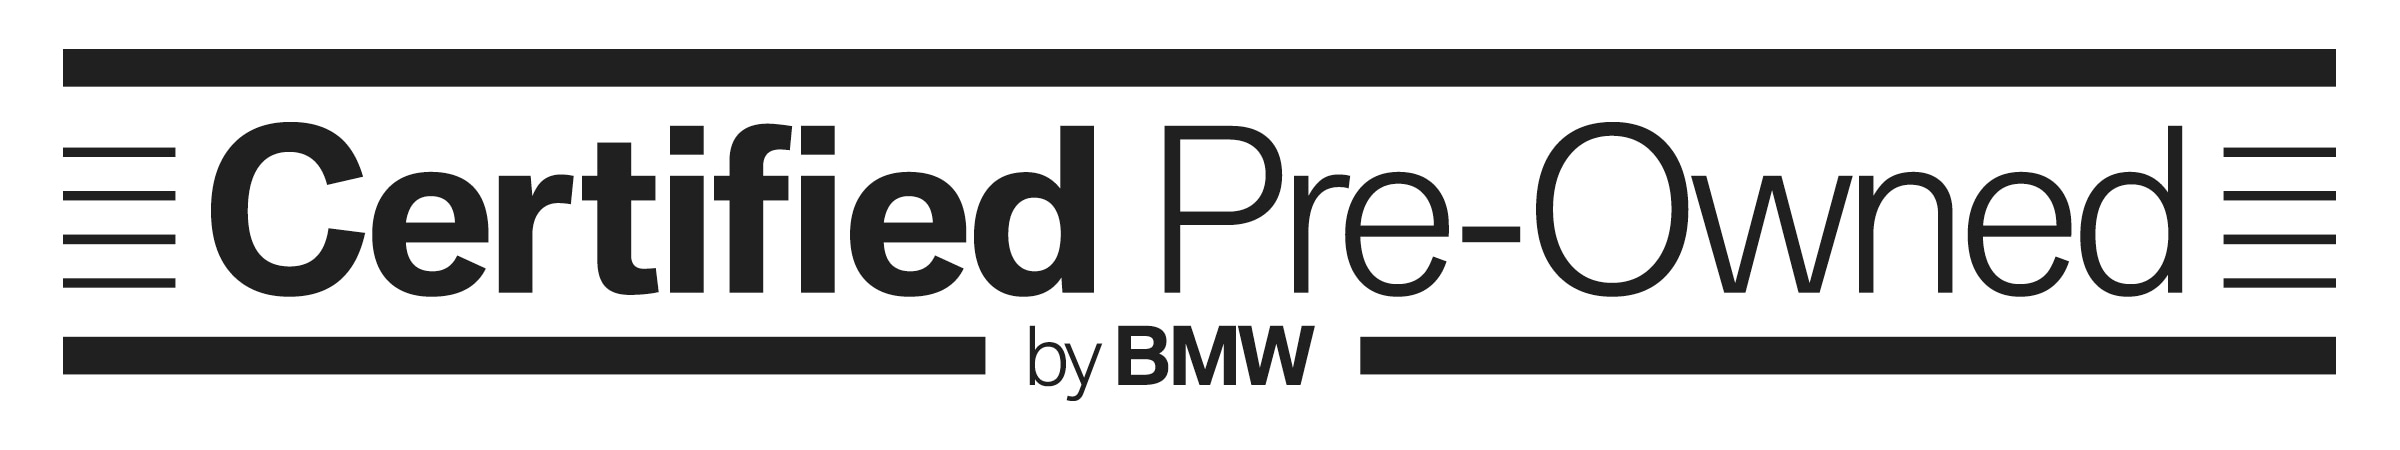 Bmw certified pre owned warranty details #4